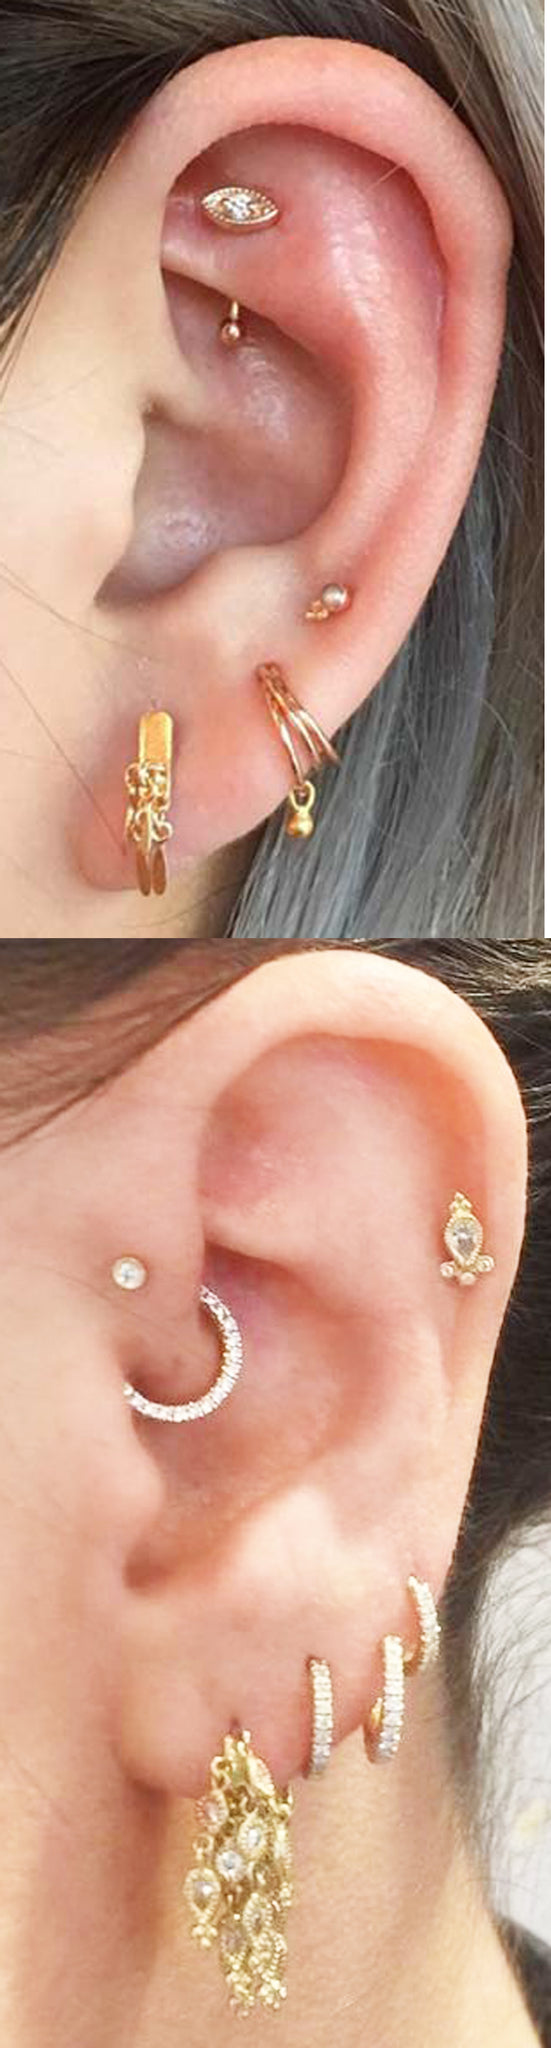 Gold Multiple Ear Piercing Jewelry Idea Combinations at MyBodiArt.com - Evil Eye Rook Barbell - Daith Crystal Earring - Tribal Auricle Stud 